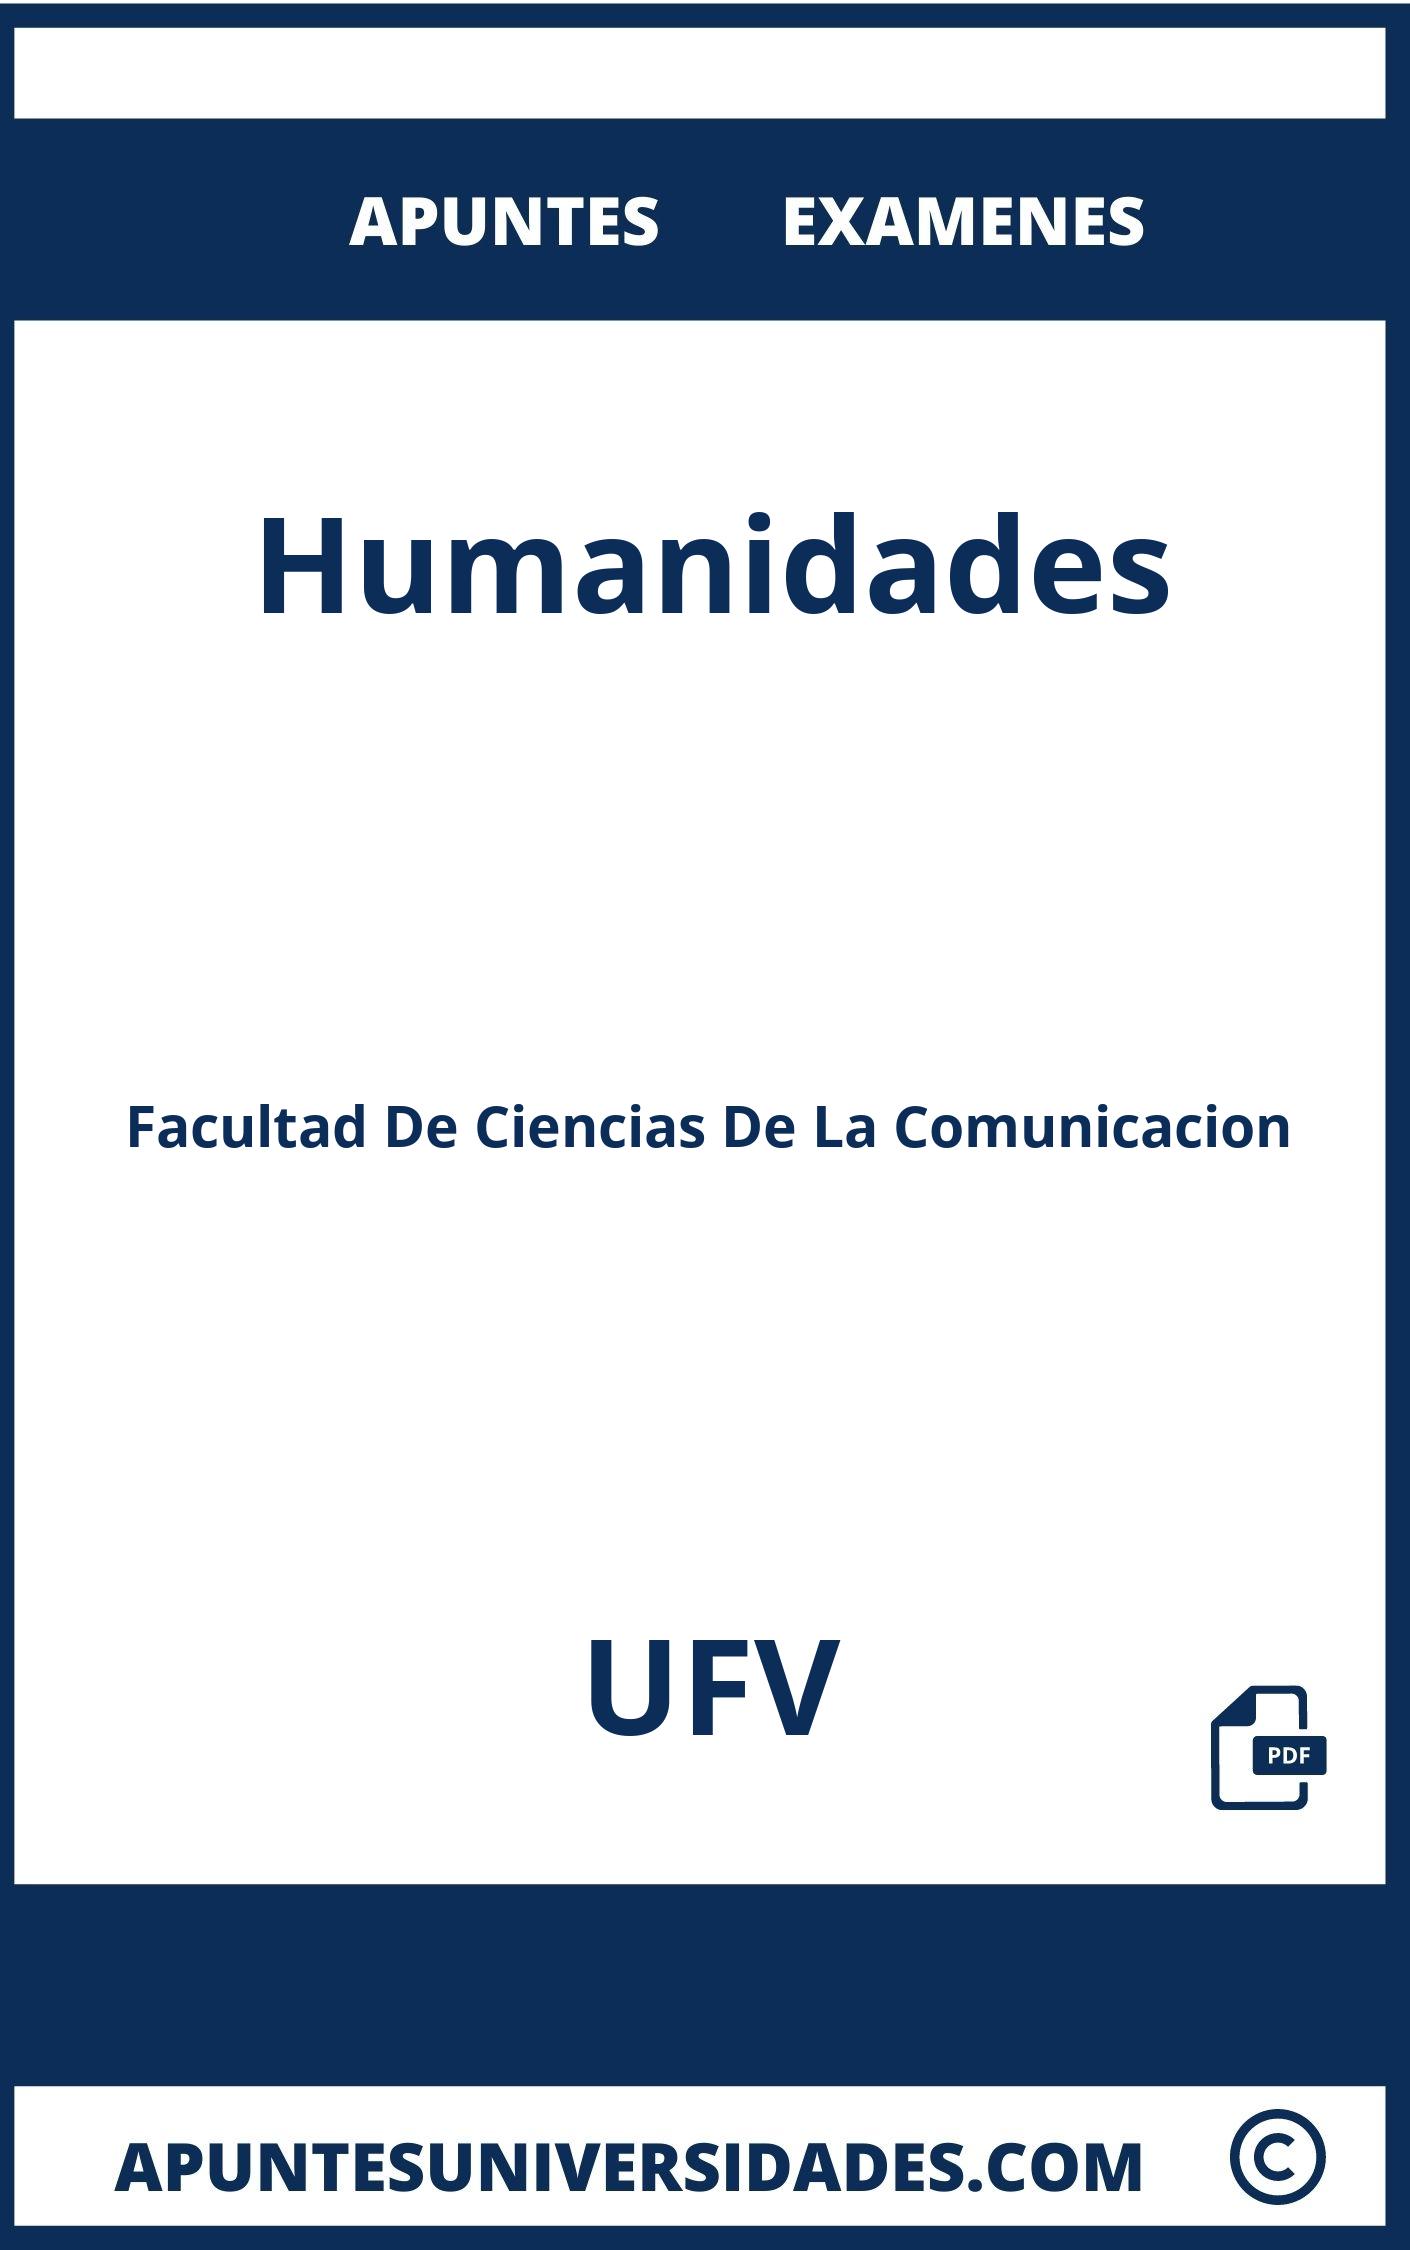 Humanidades UFV Apuntes Examenes